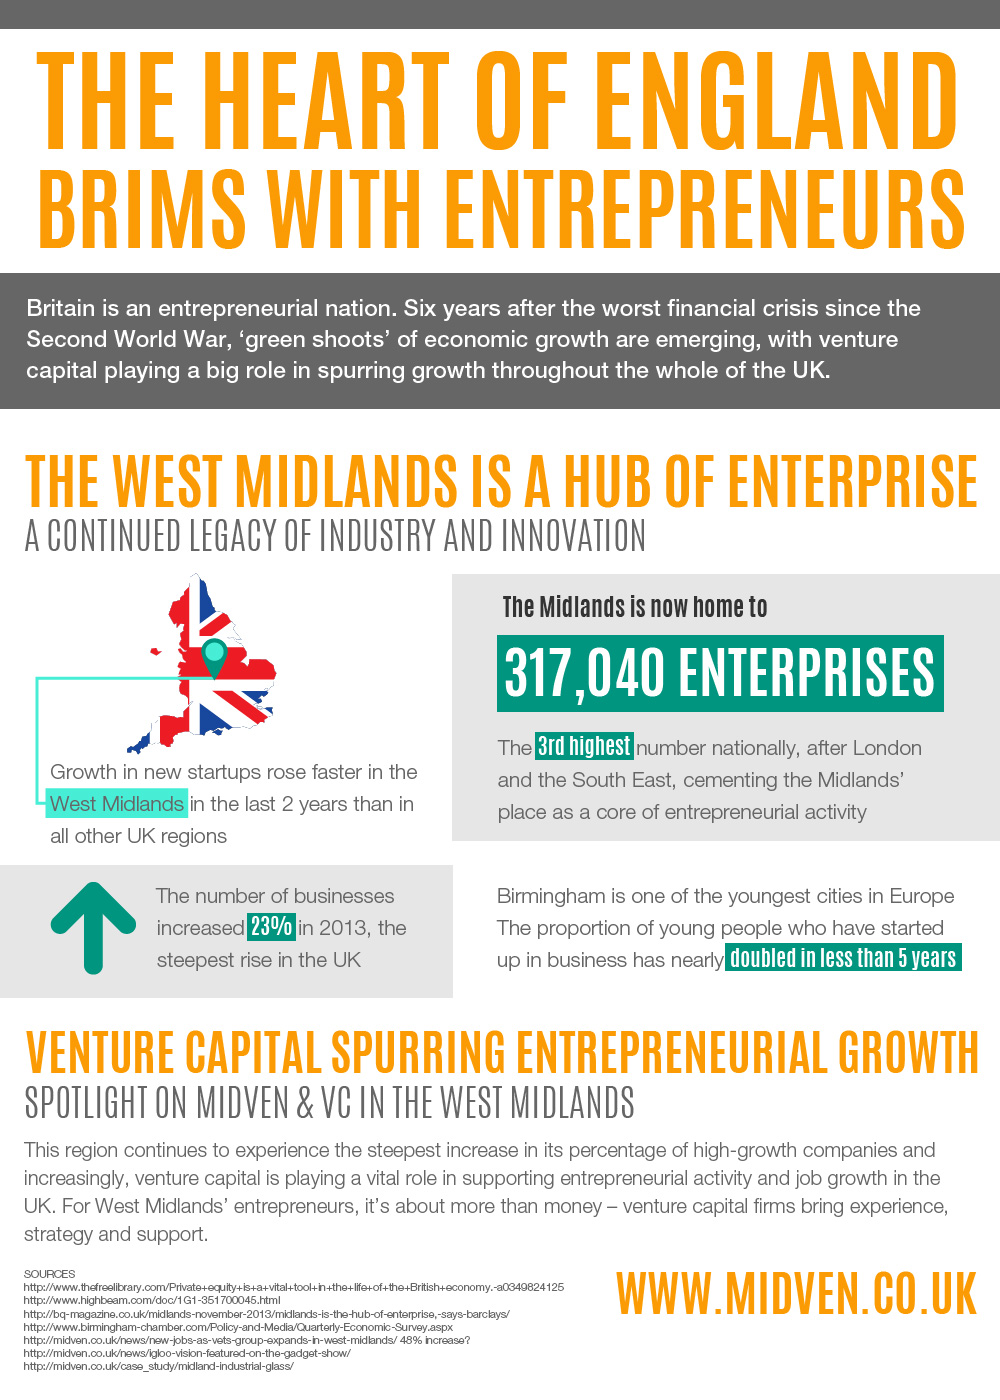 West Midlands fast becoming the entrepreneurial “Hub of Enterprise” of UK